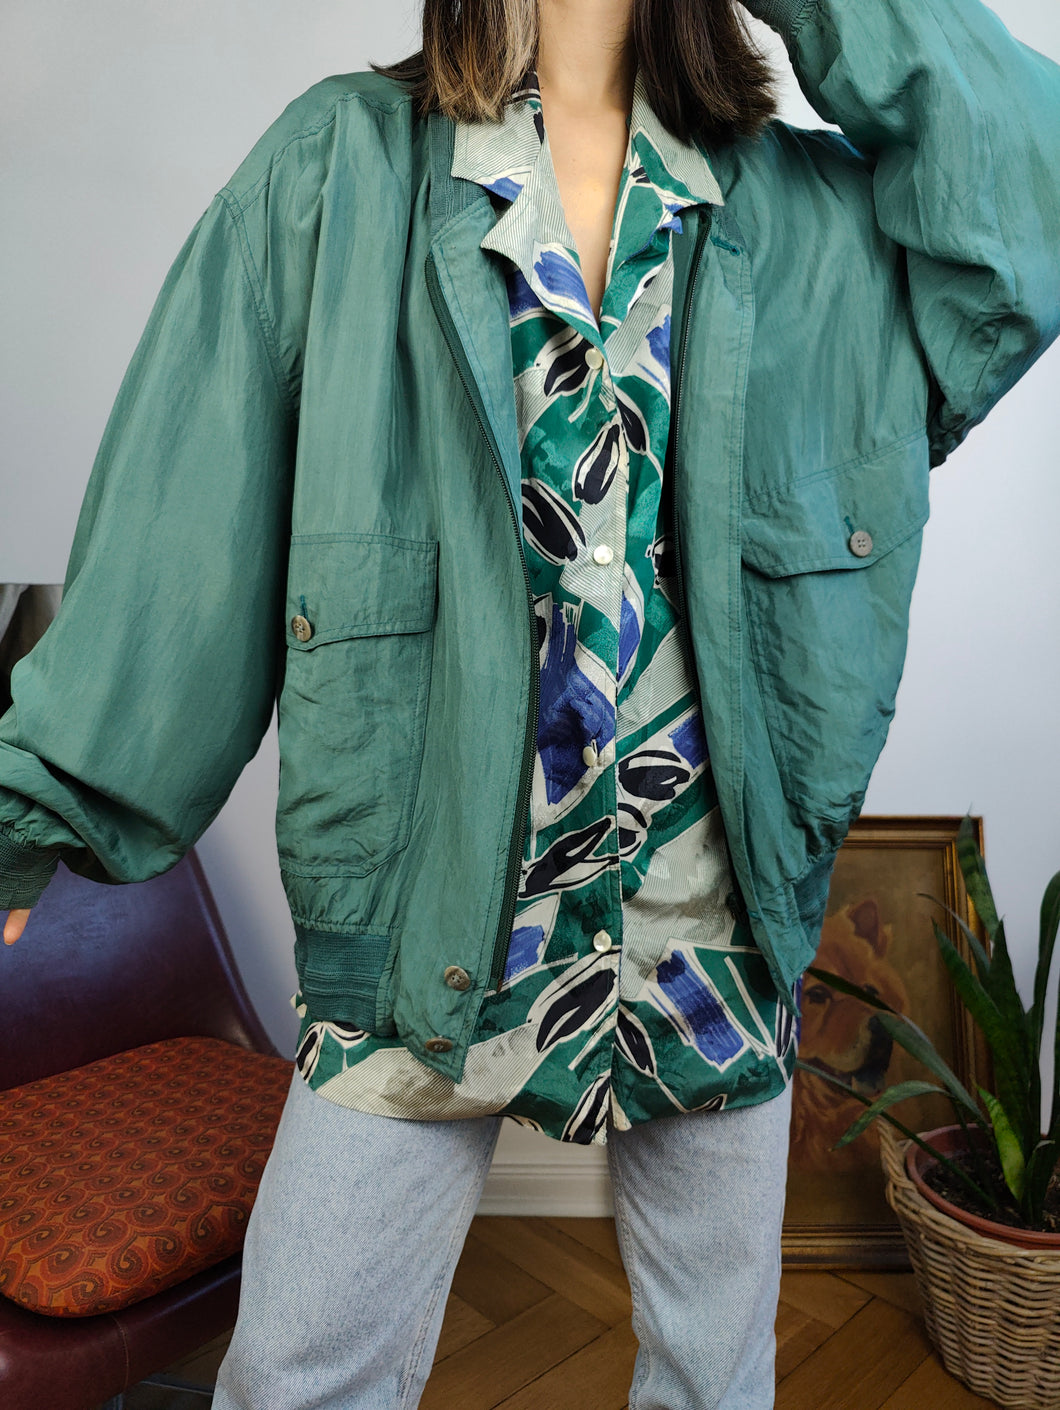 Vintage 90s silk bomber jacket blouson green teal made in Italy unisex men 52 L